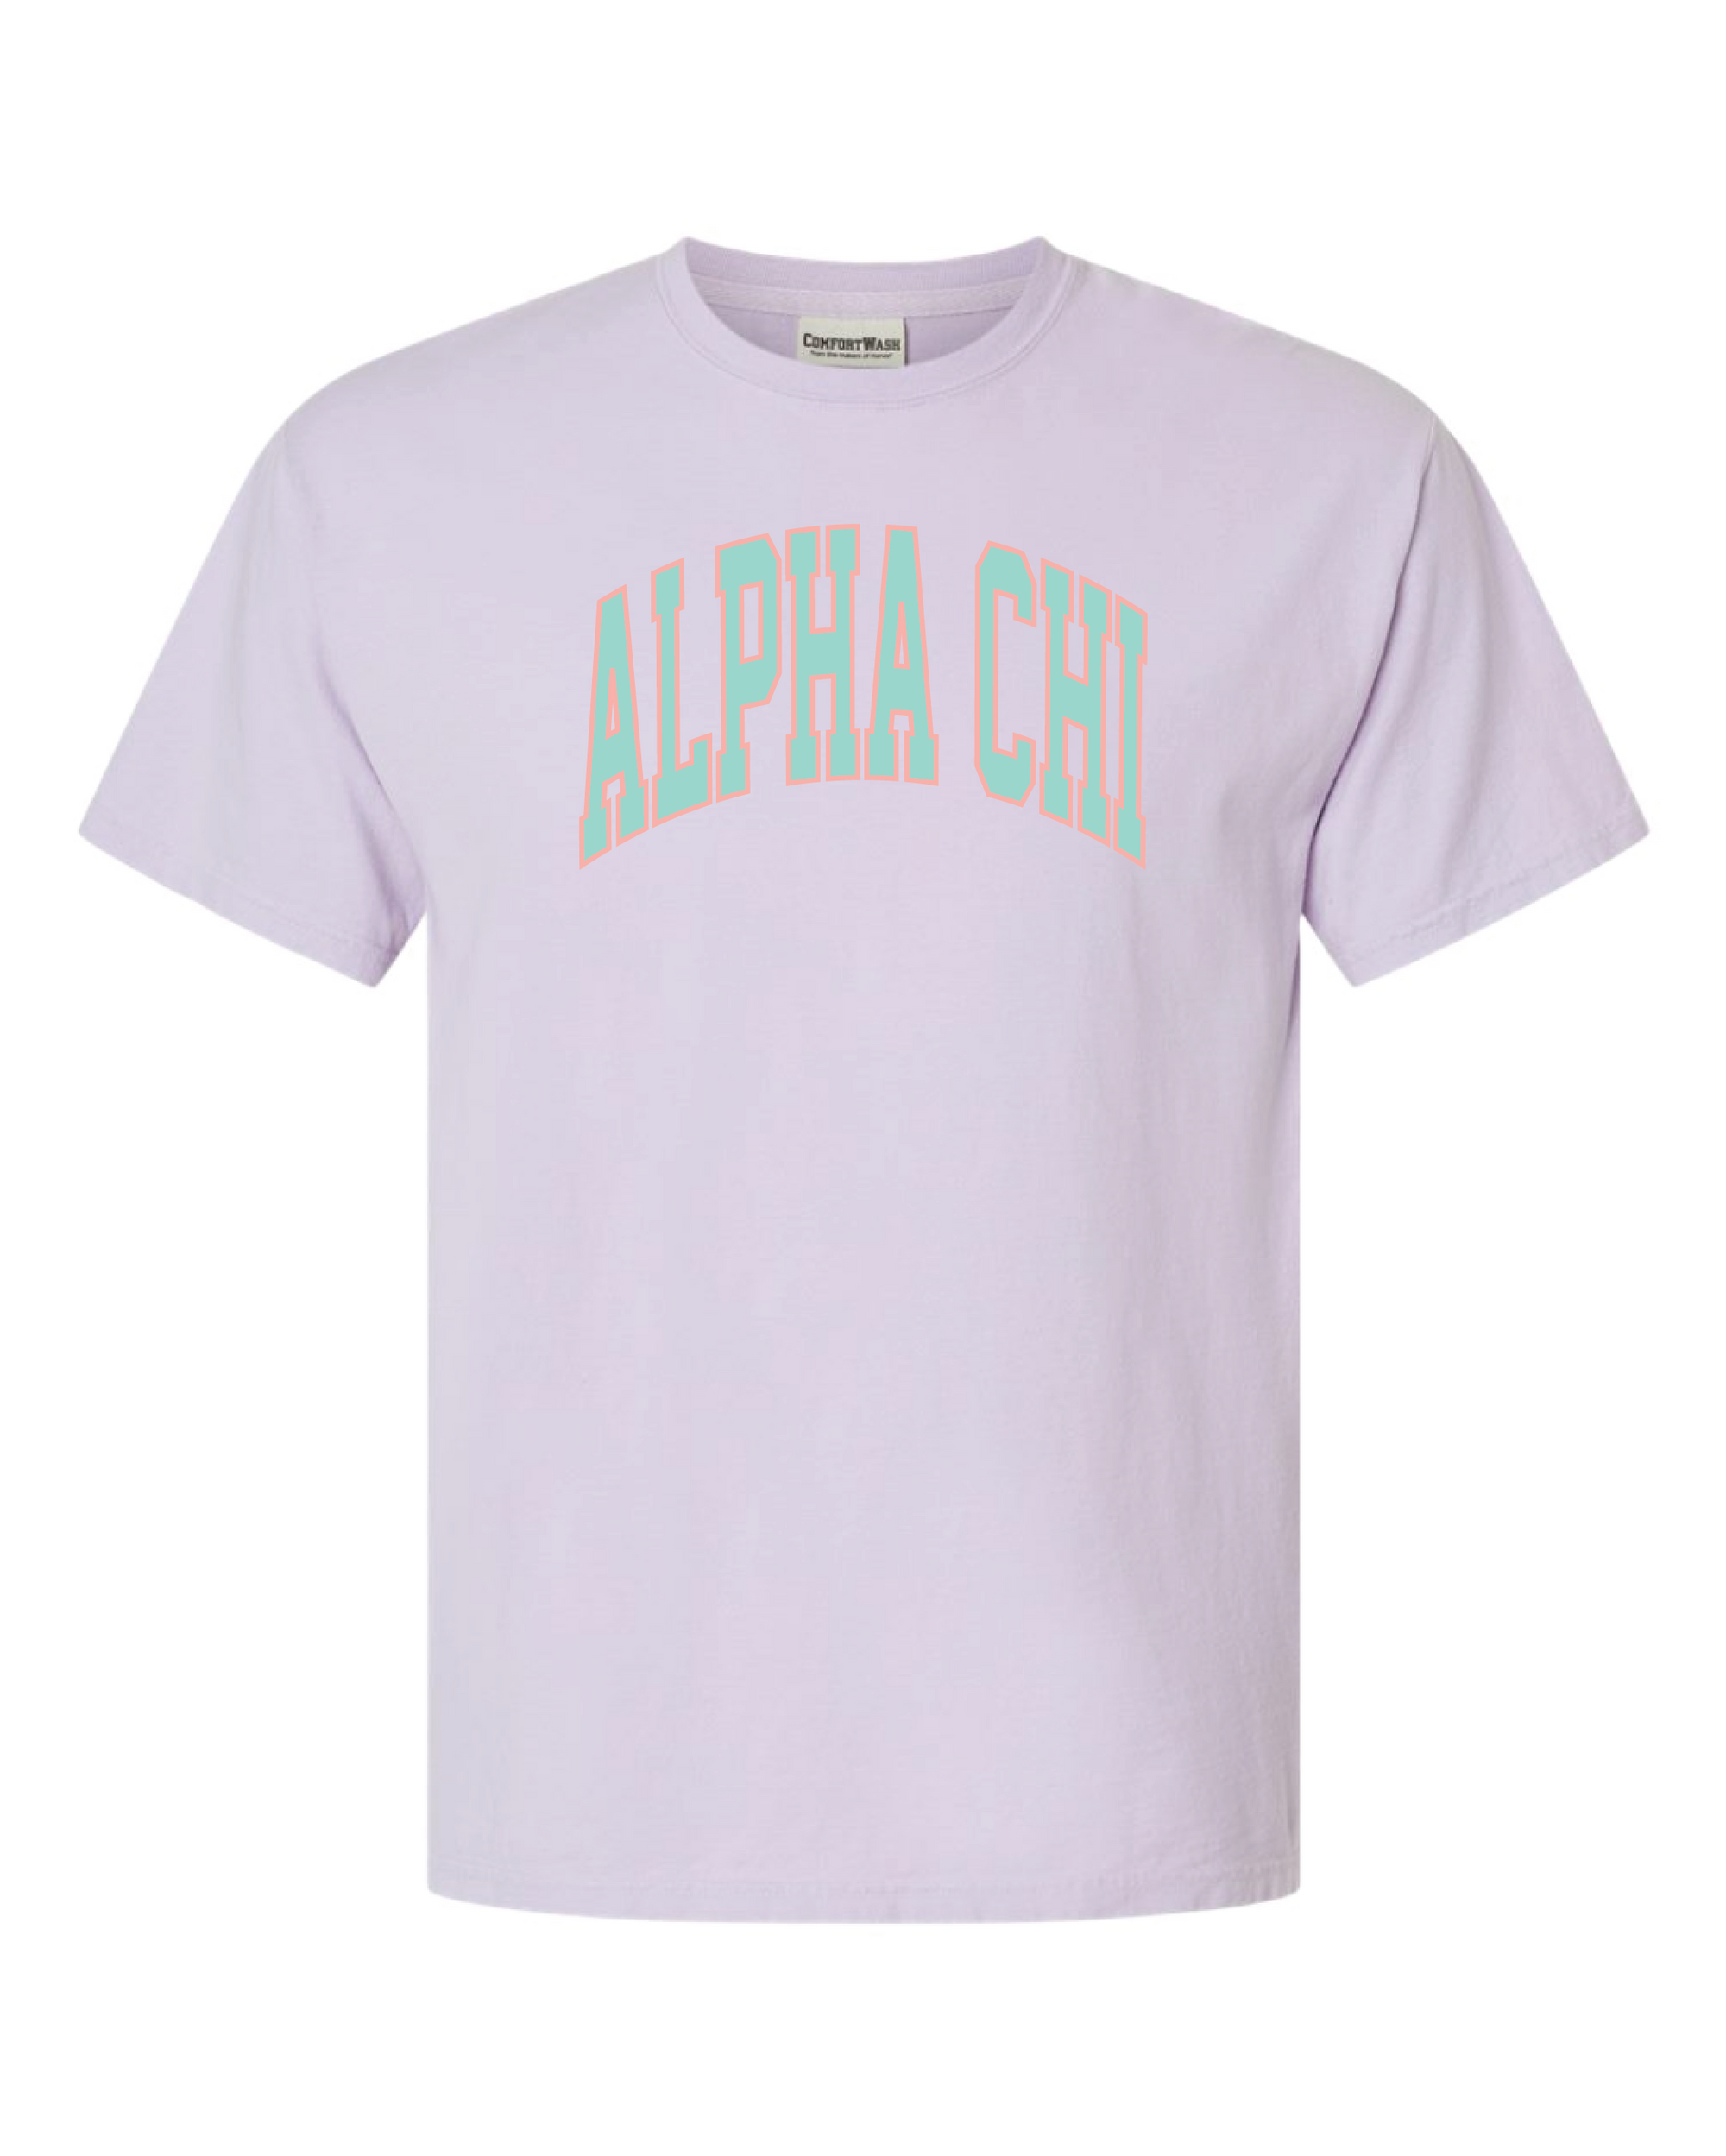 Alpha Chi Varsity Letters Tshirt